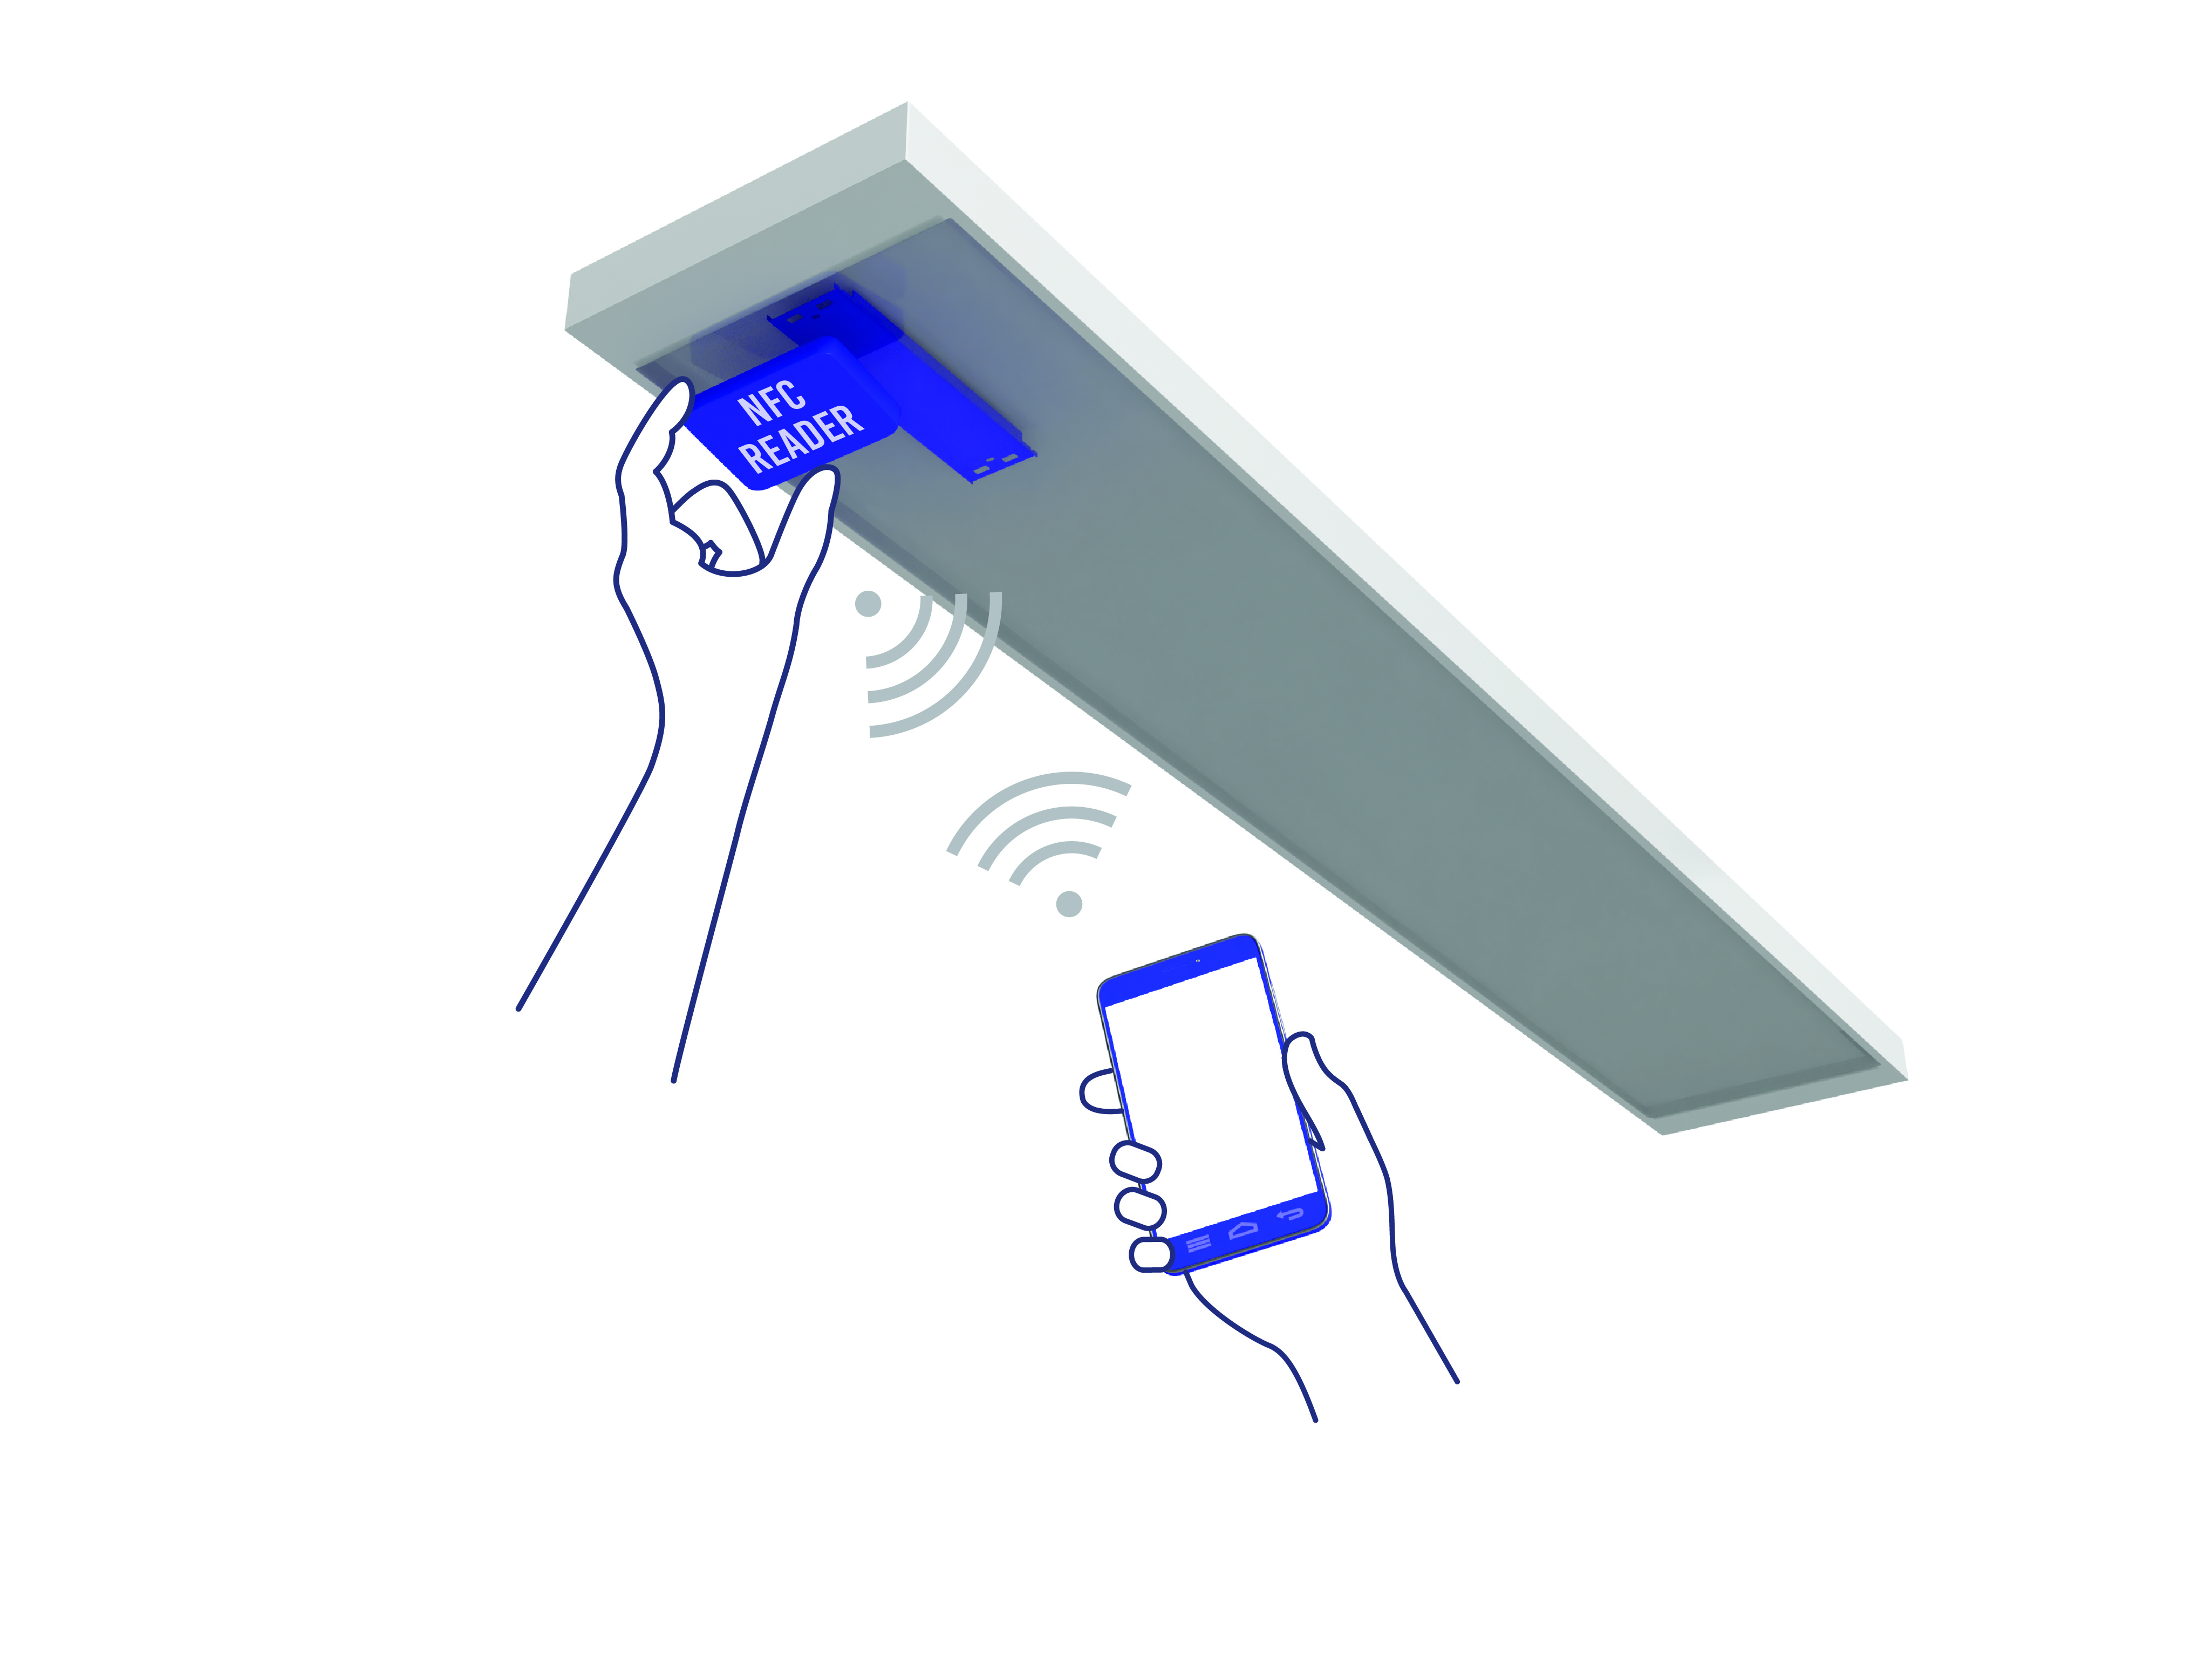 NFC Reader (BlueBerry LE HF)